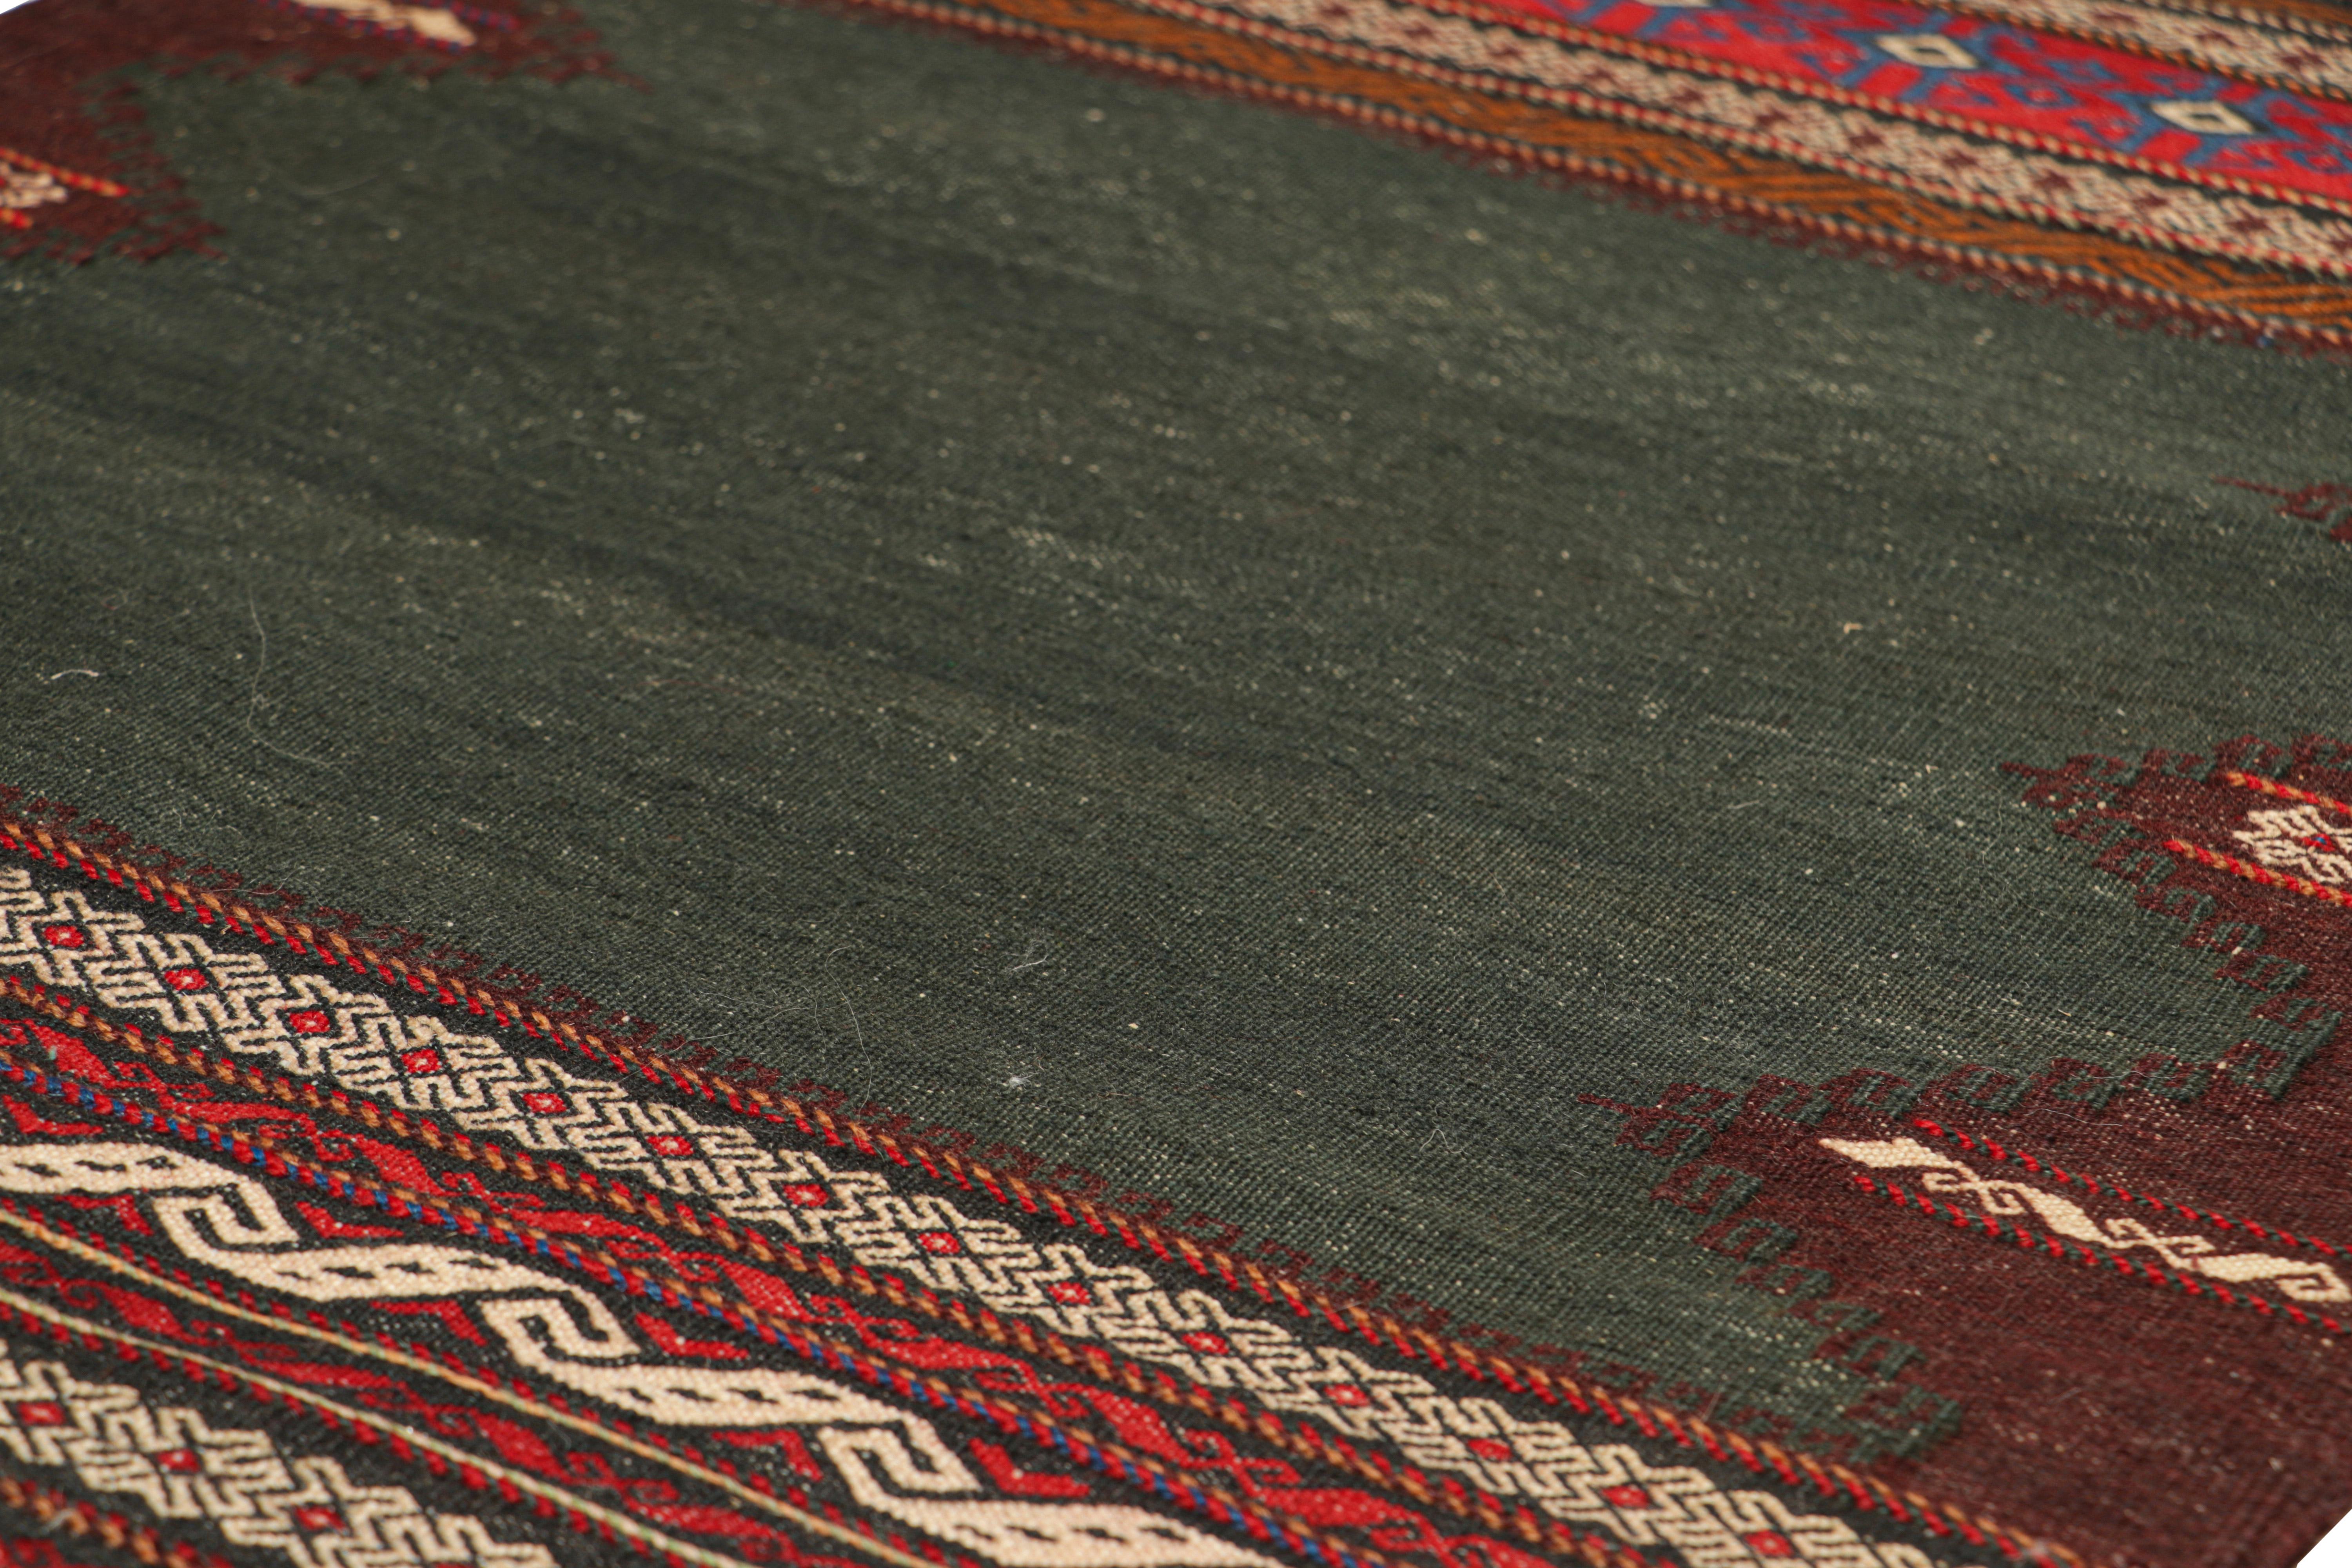 Tribal Vintage Afghan Kilim in Gray with Geometric Patterns, from Rug & Kilim